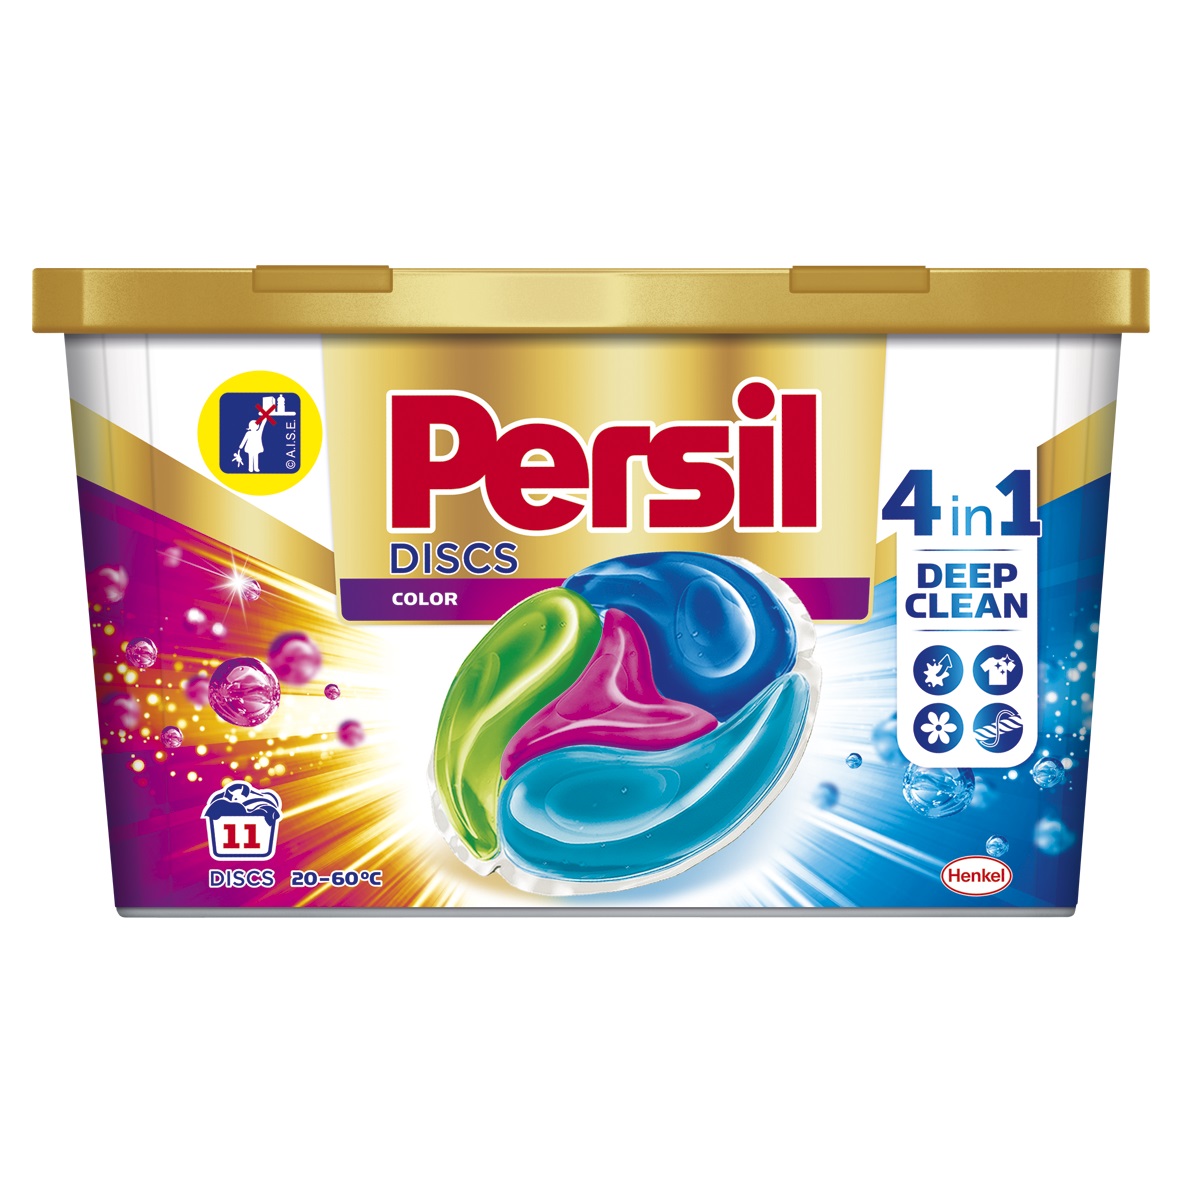 Диски для прання Persil Color 4 in 1 Discs Deep Clean Plus Active Fresh, 11 шт. (796702) - фото 1